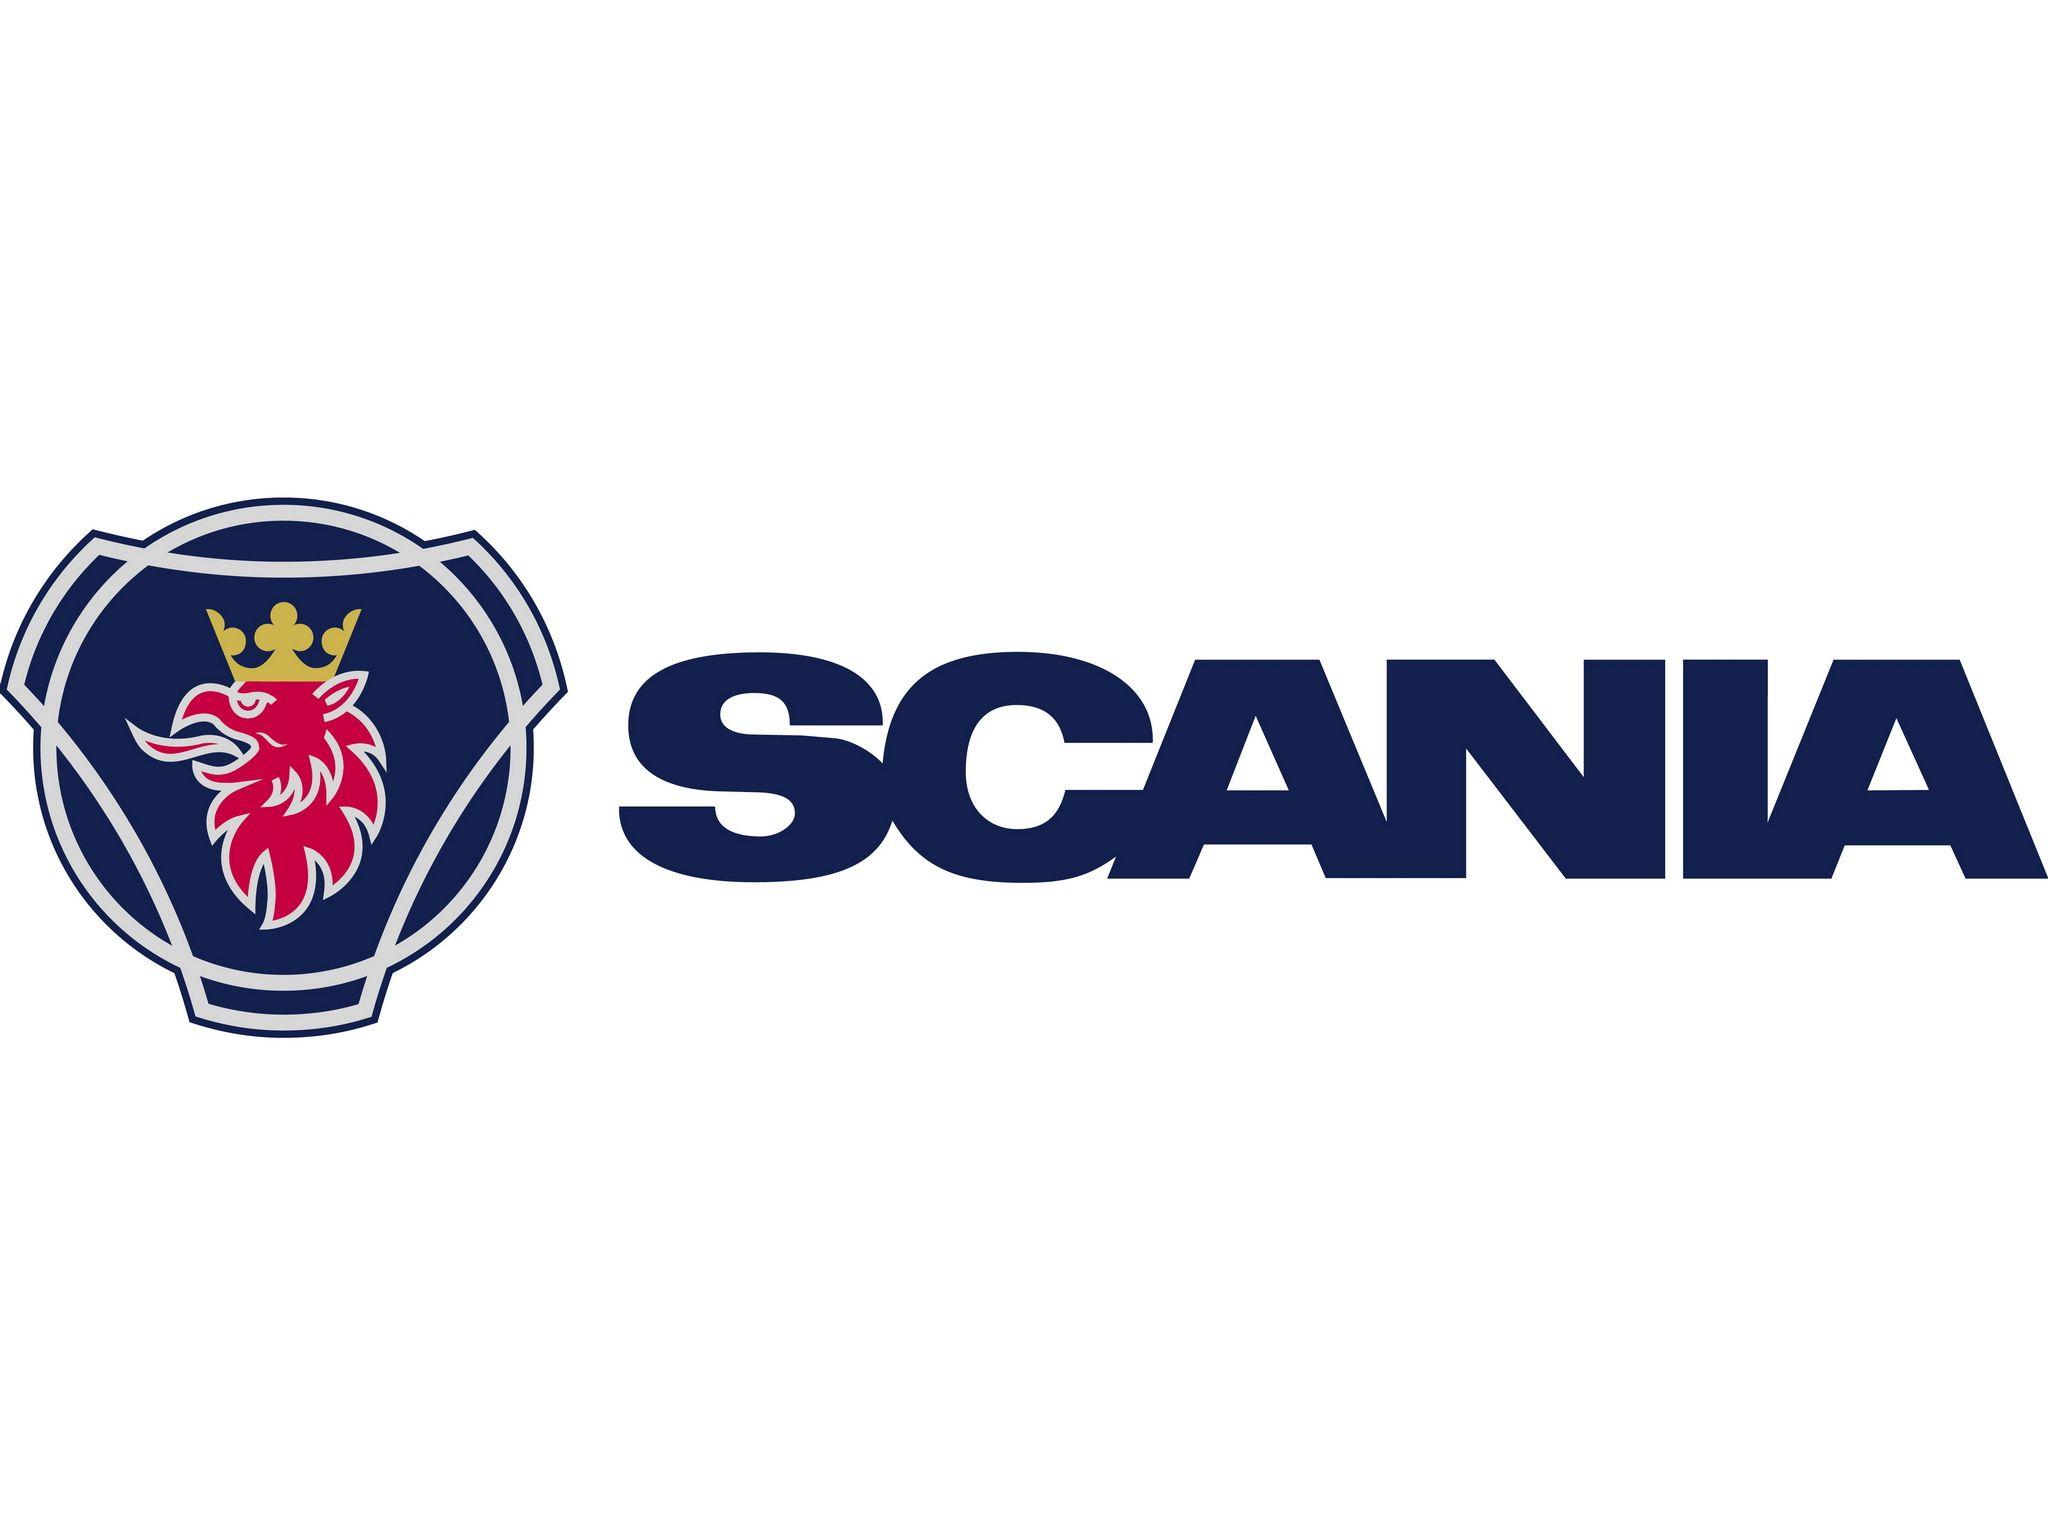 Scania Logos